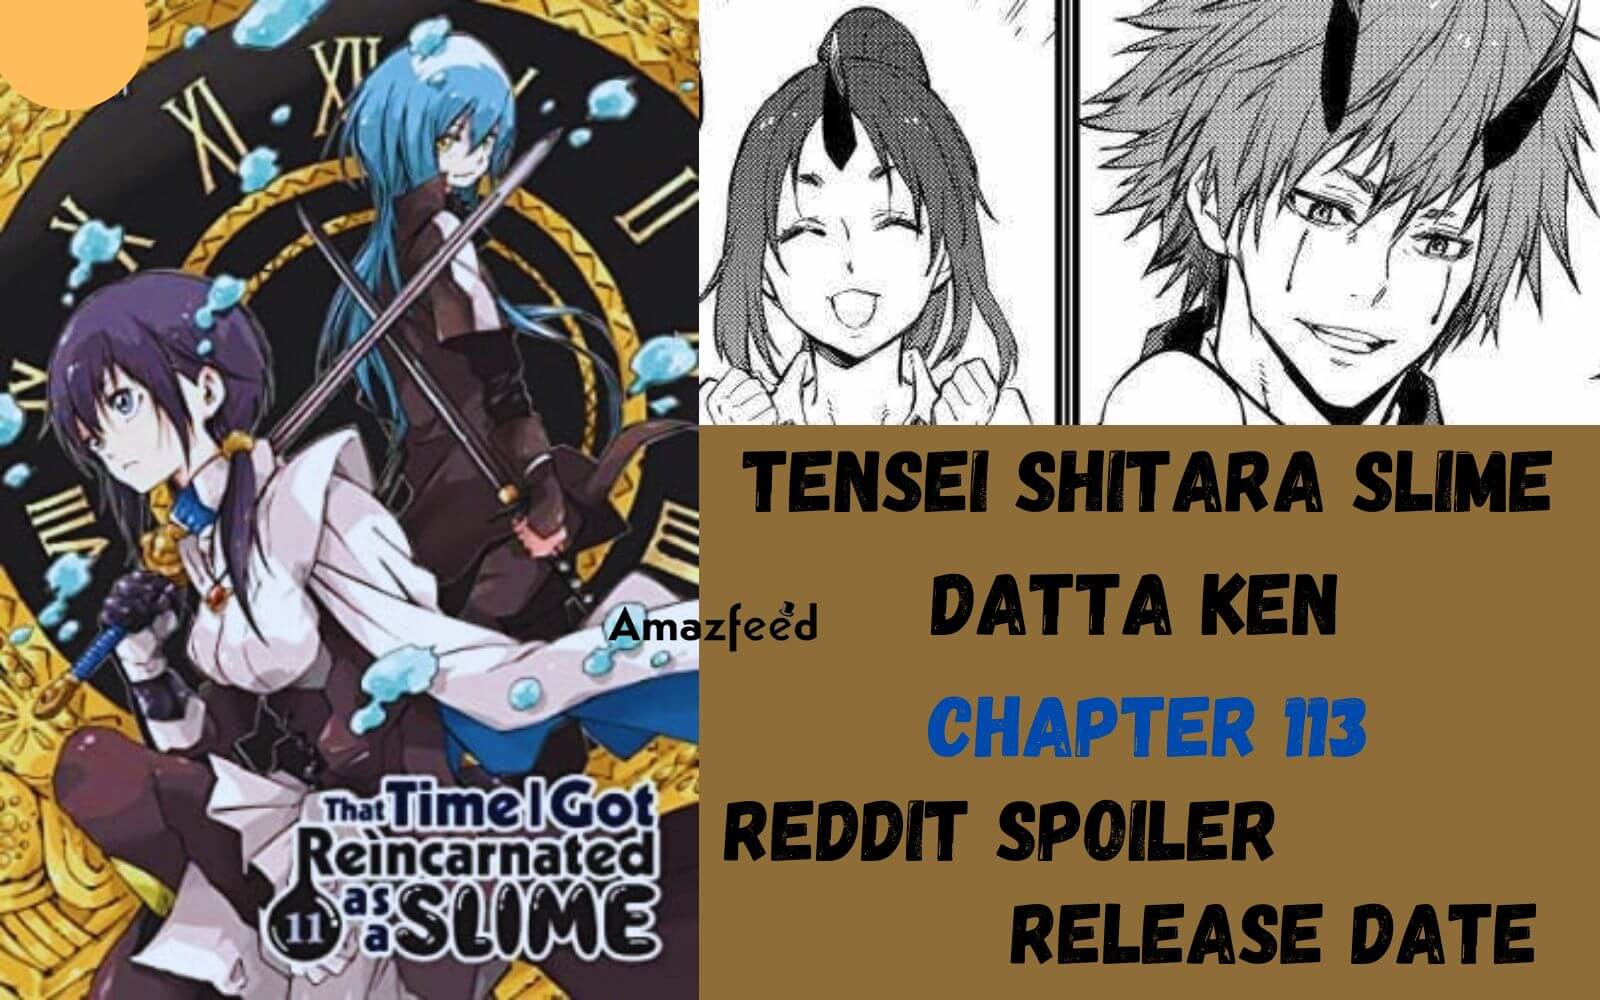 Category:Villains, Tensei Shitara Slime Datta Ken Wiki